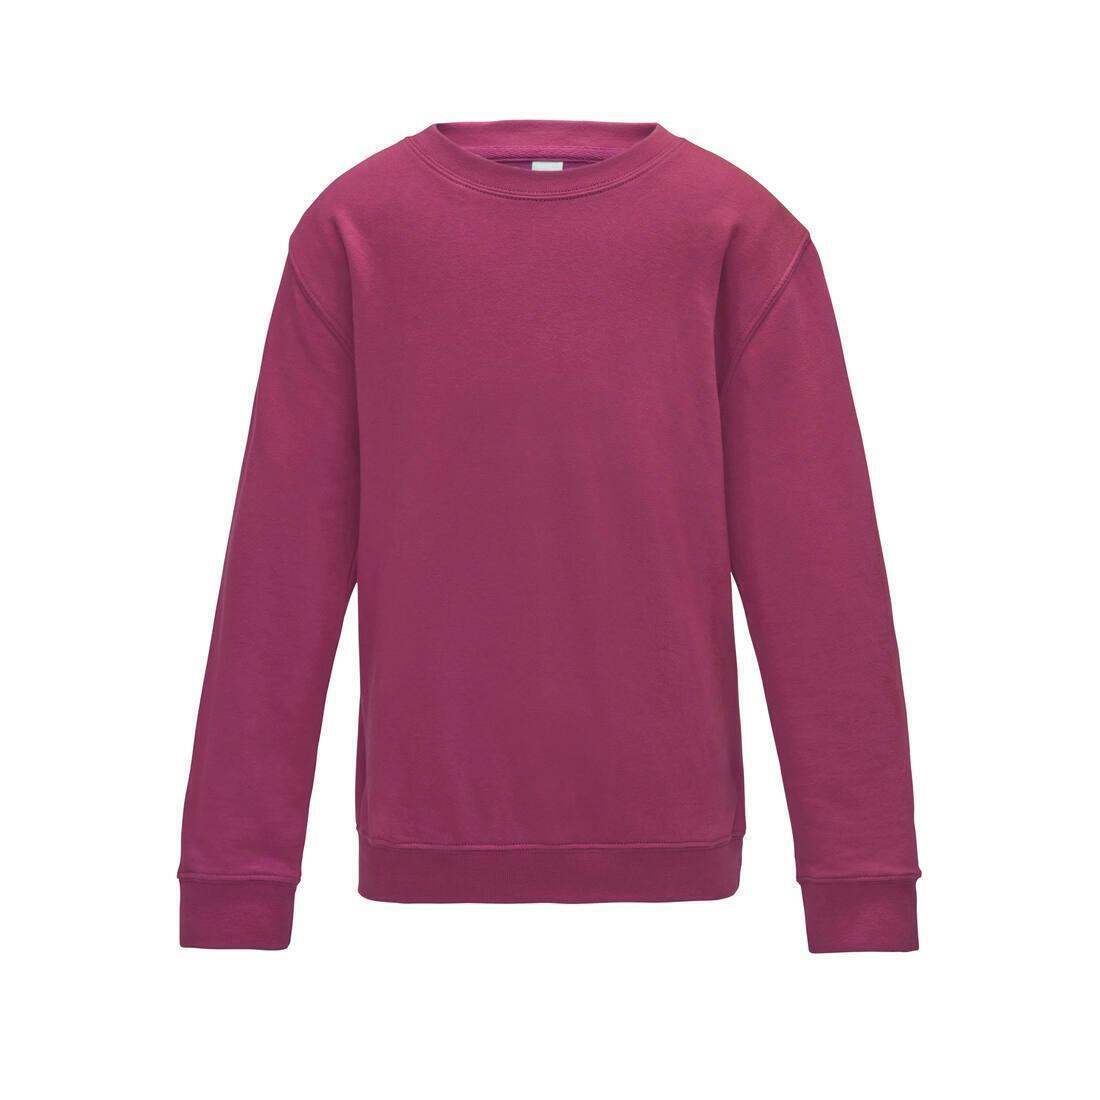 Kinder sweatshirts hot pink personaliseer je sweatshirts